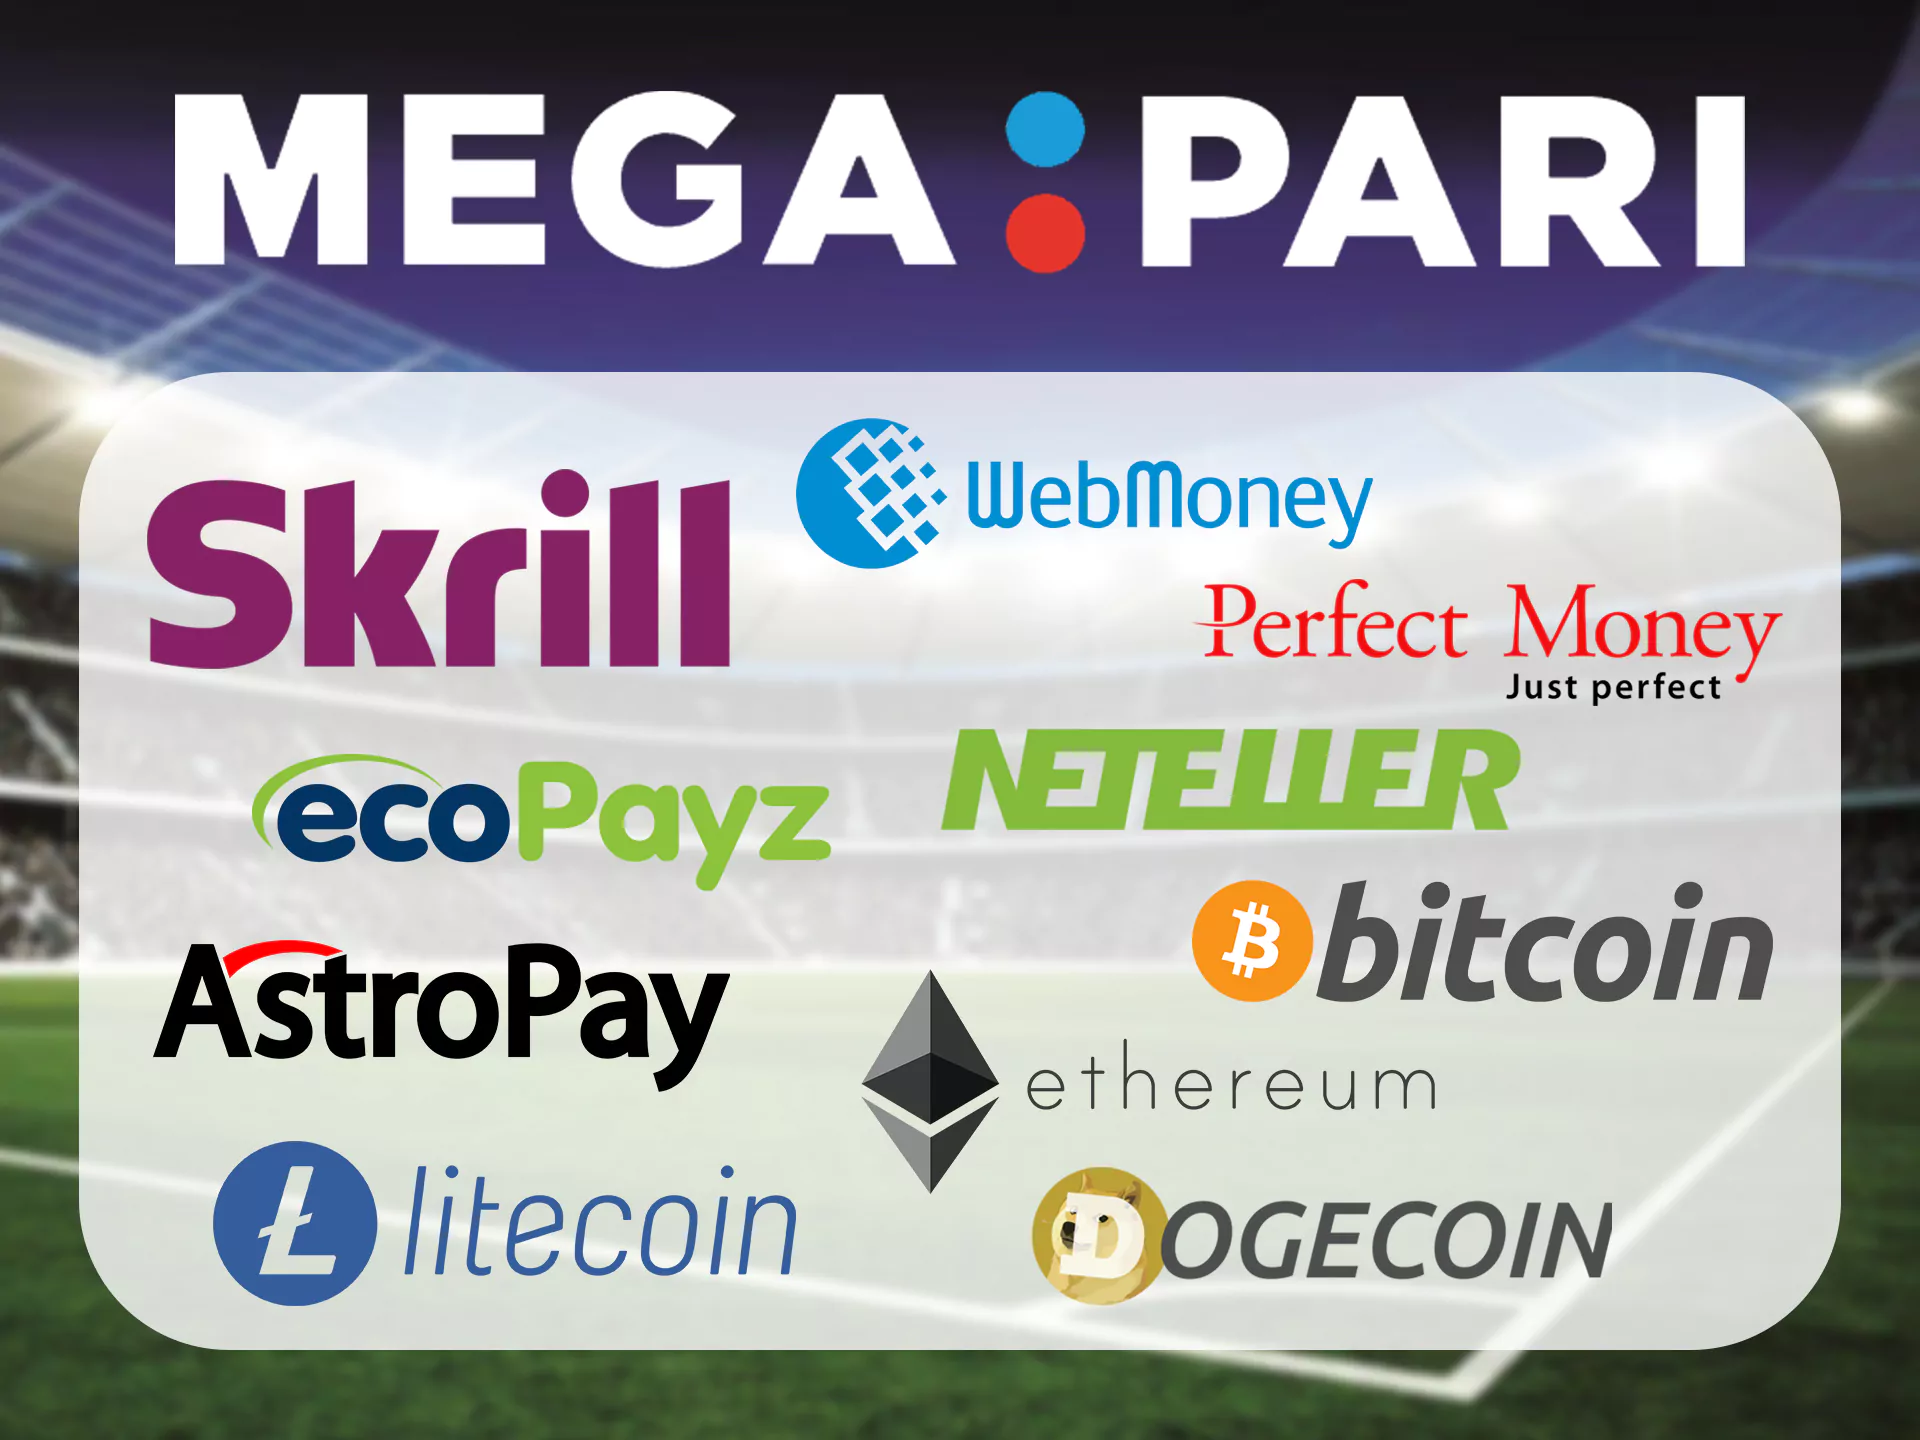 Mega Pari provides various payment systems.